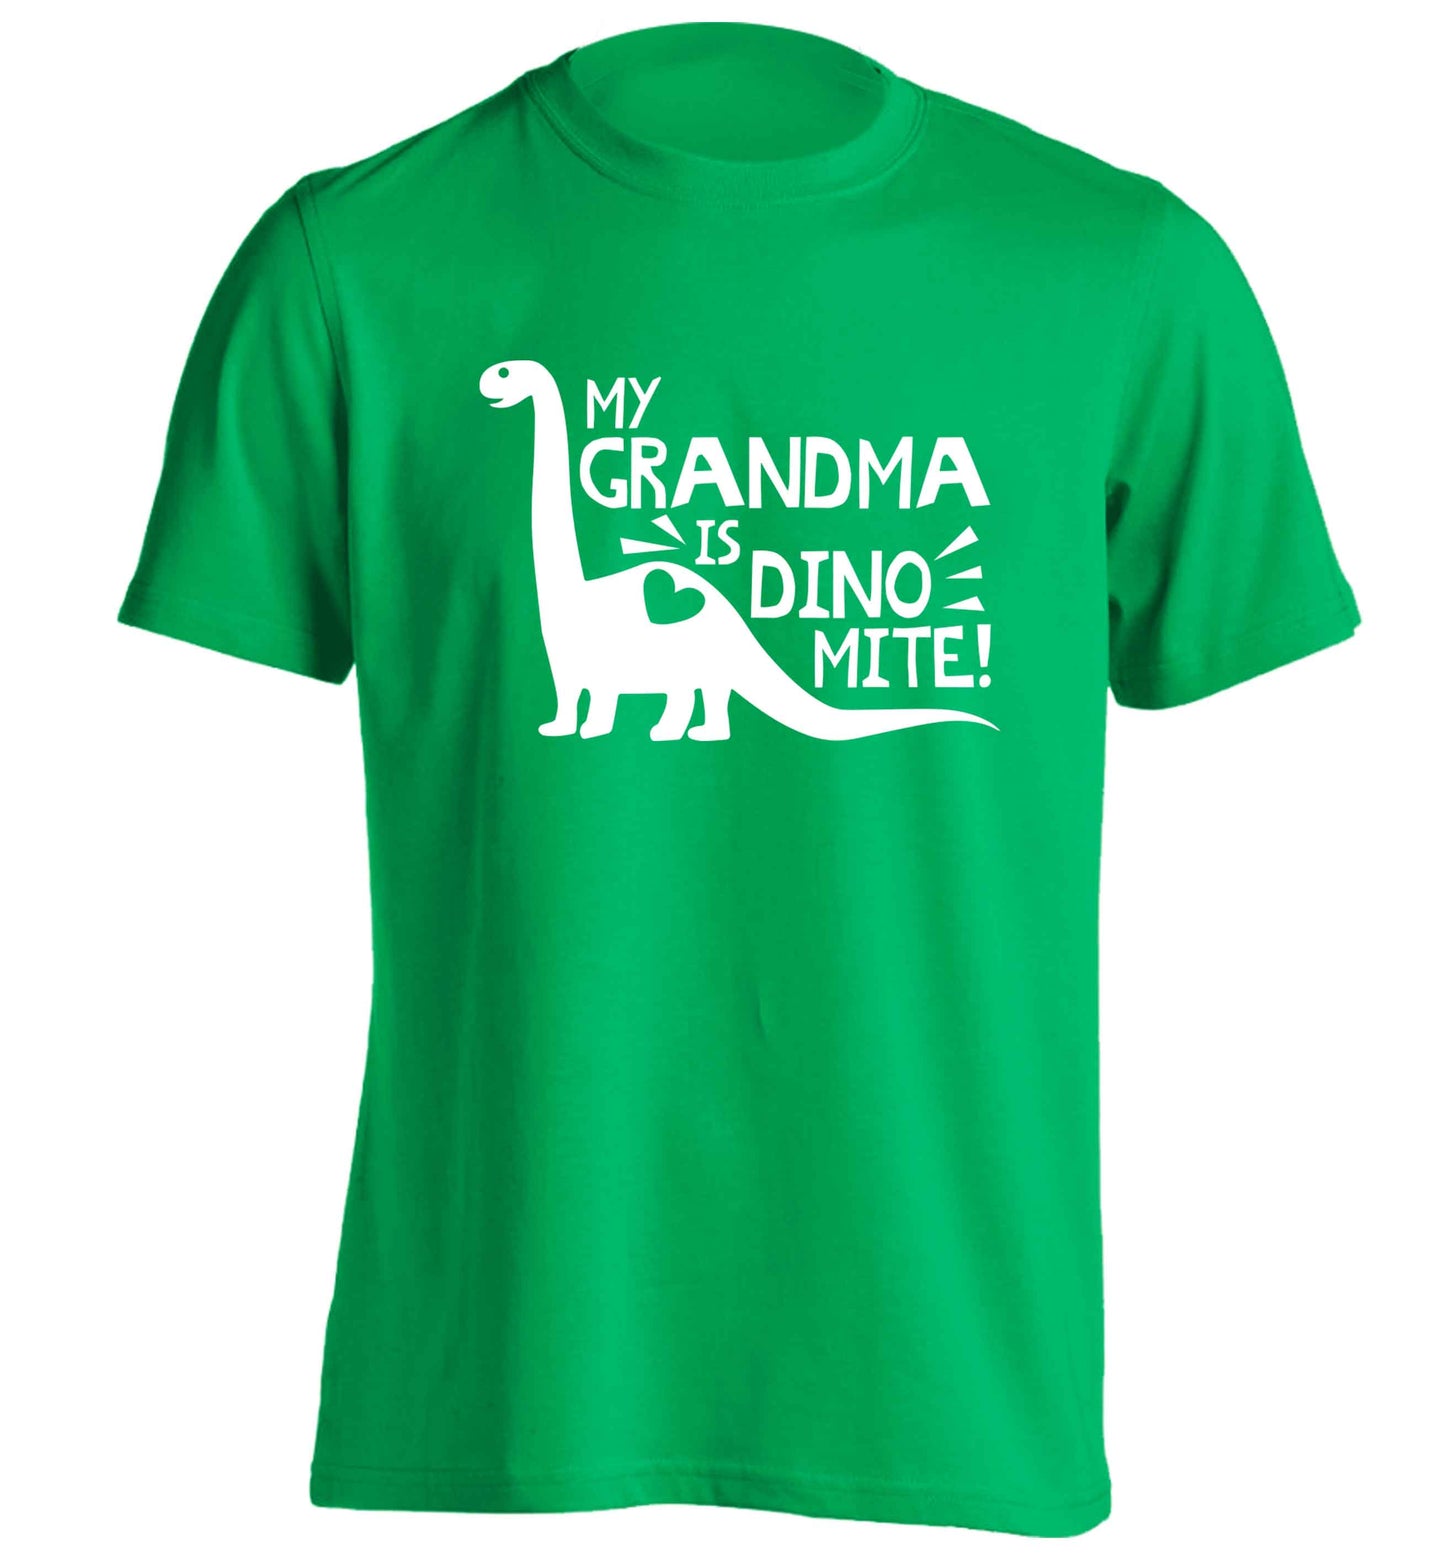 My grandma is dinomite! adults unisex green Tshirt 2XL